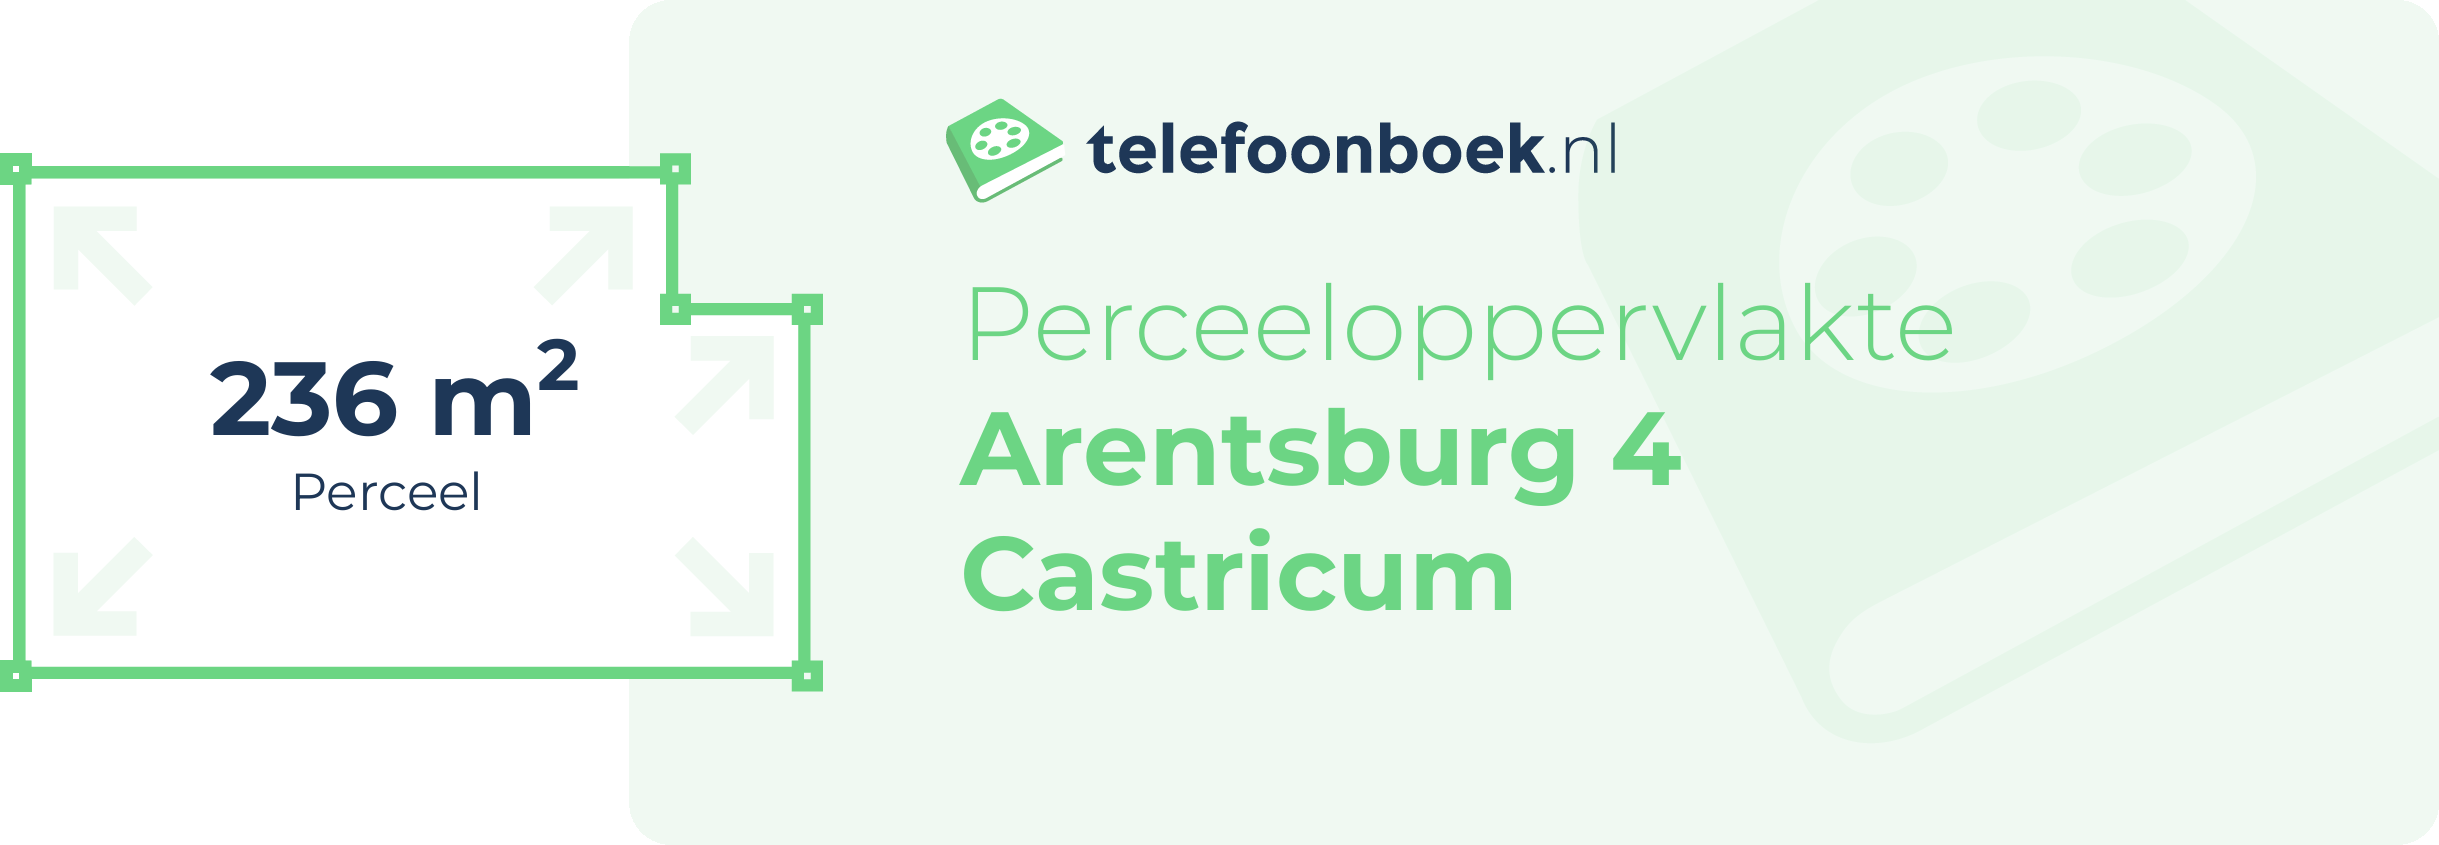 Perceeloppervlakte Arentsburg 4 Castricum